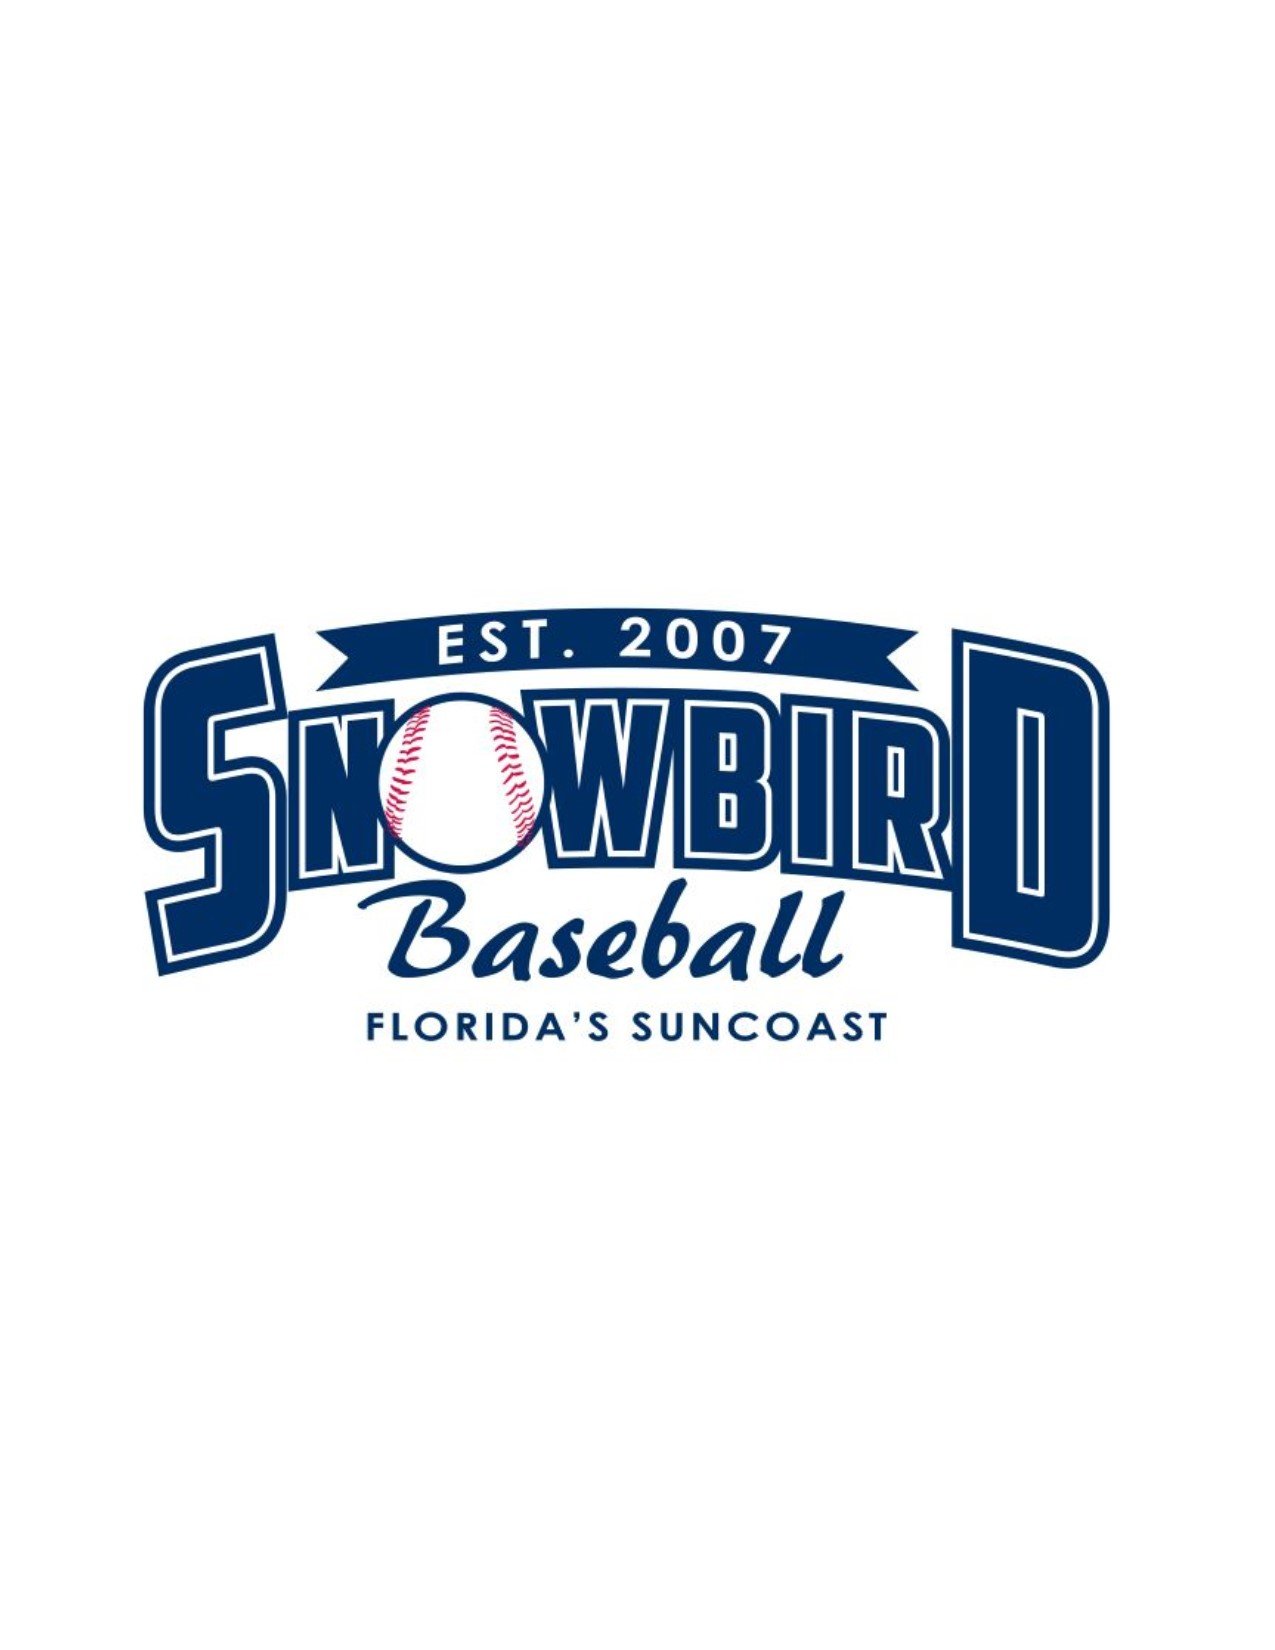 Snowbird Baseball (Snowbirdbasebal) Twitter